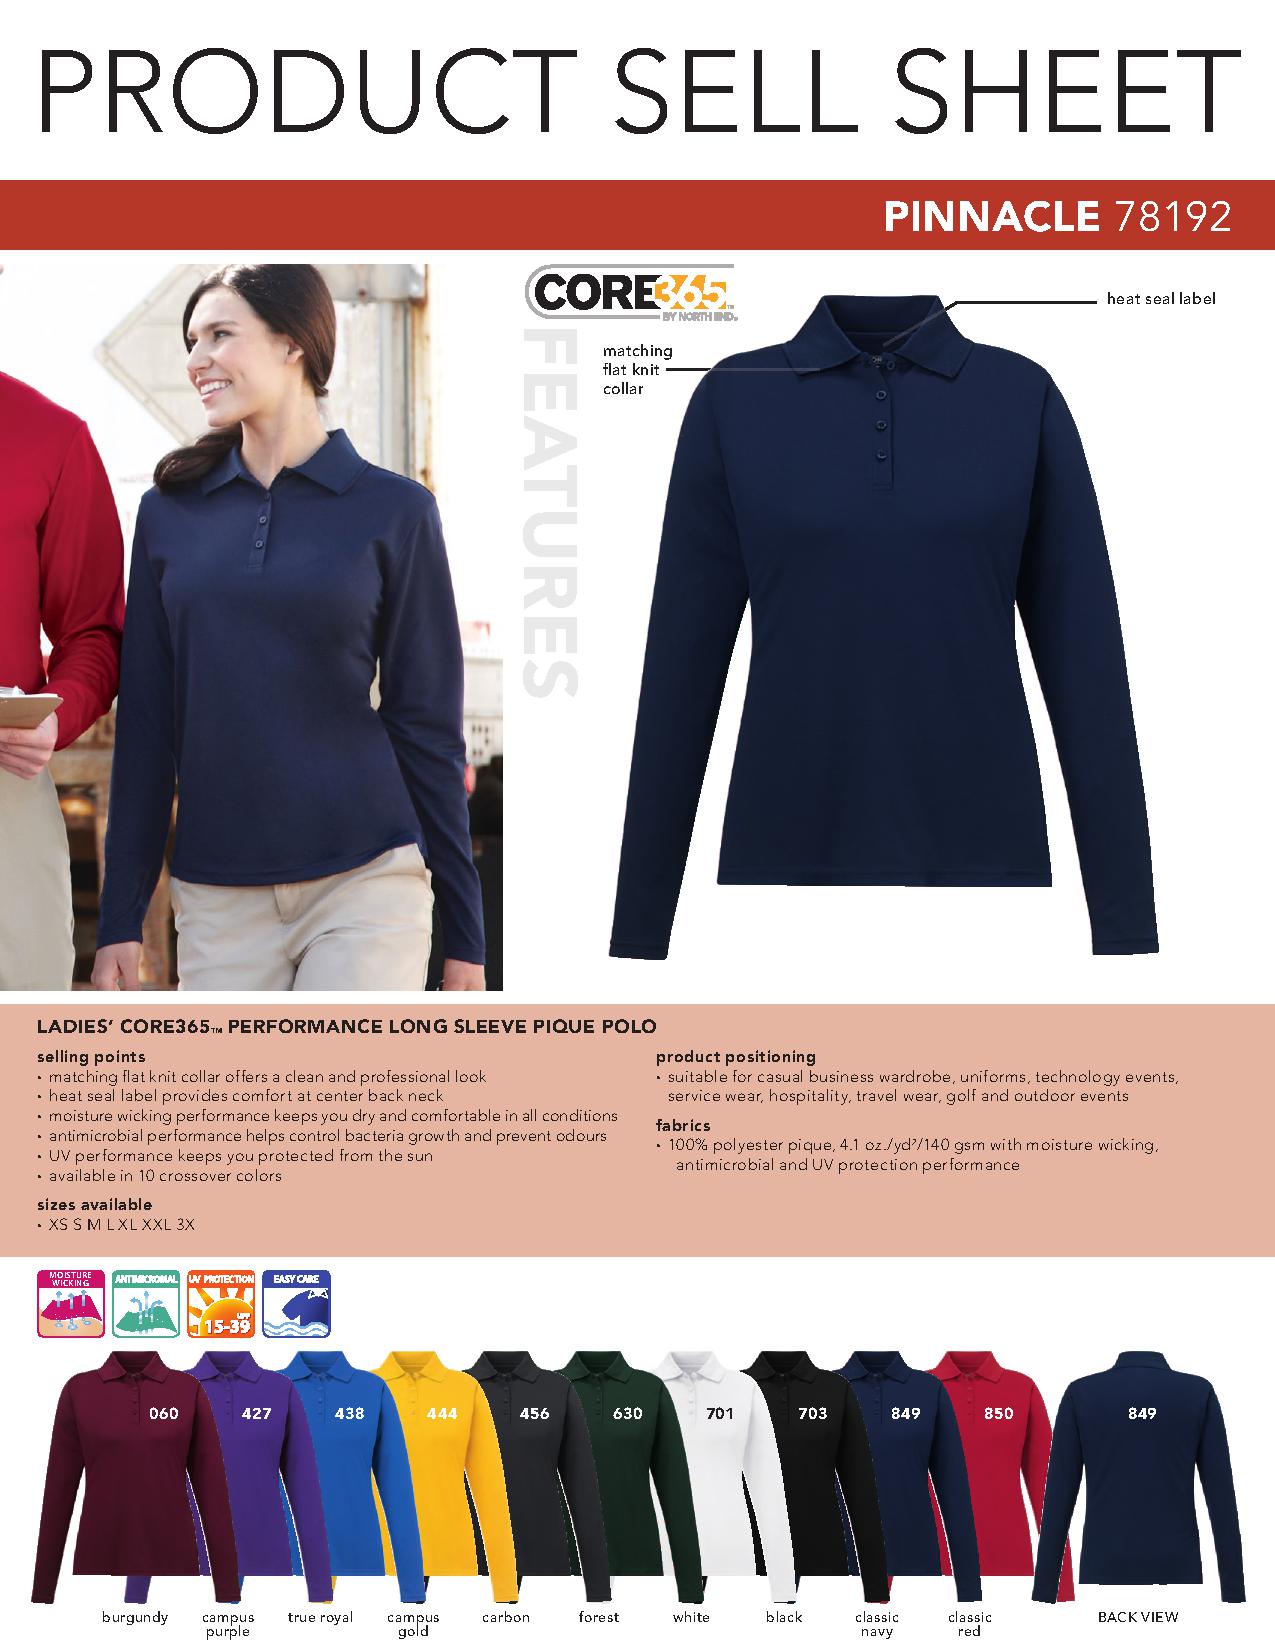 Core 365 78192 - Ladies' Pinnacle Performance Long Sleeve Pique Polo